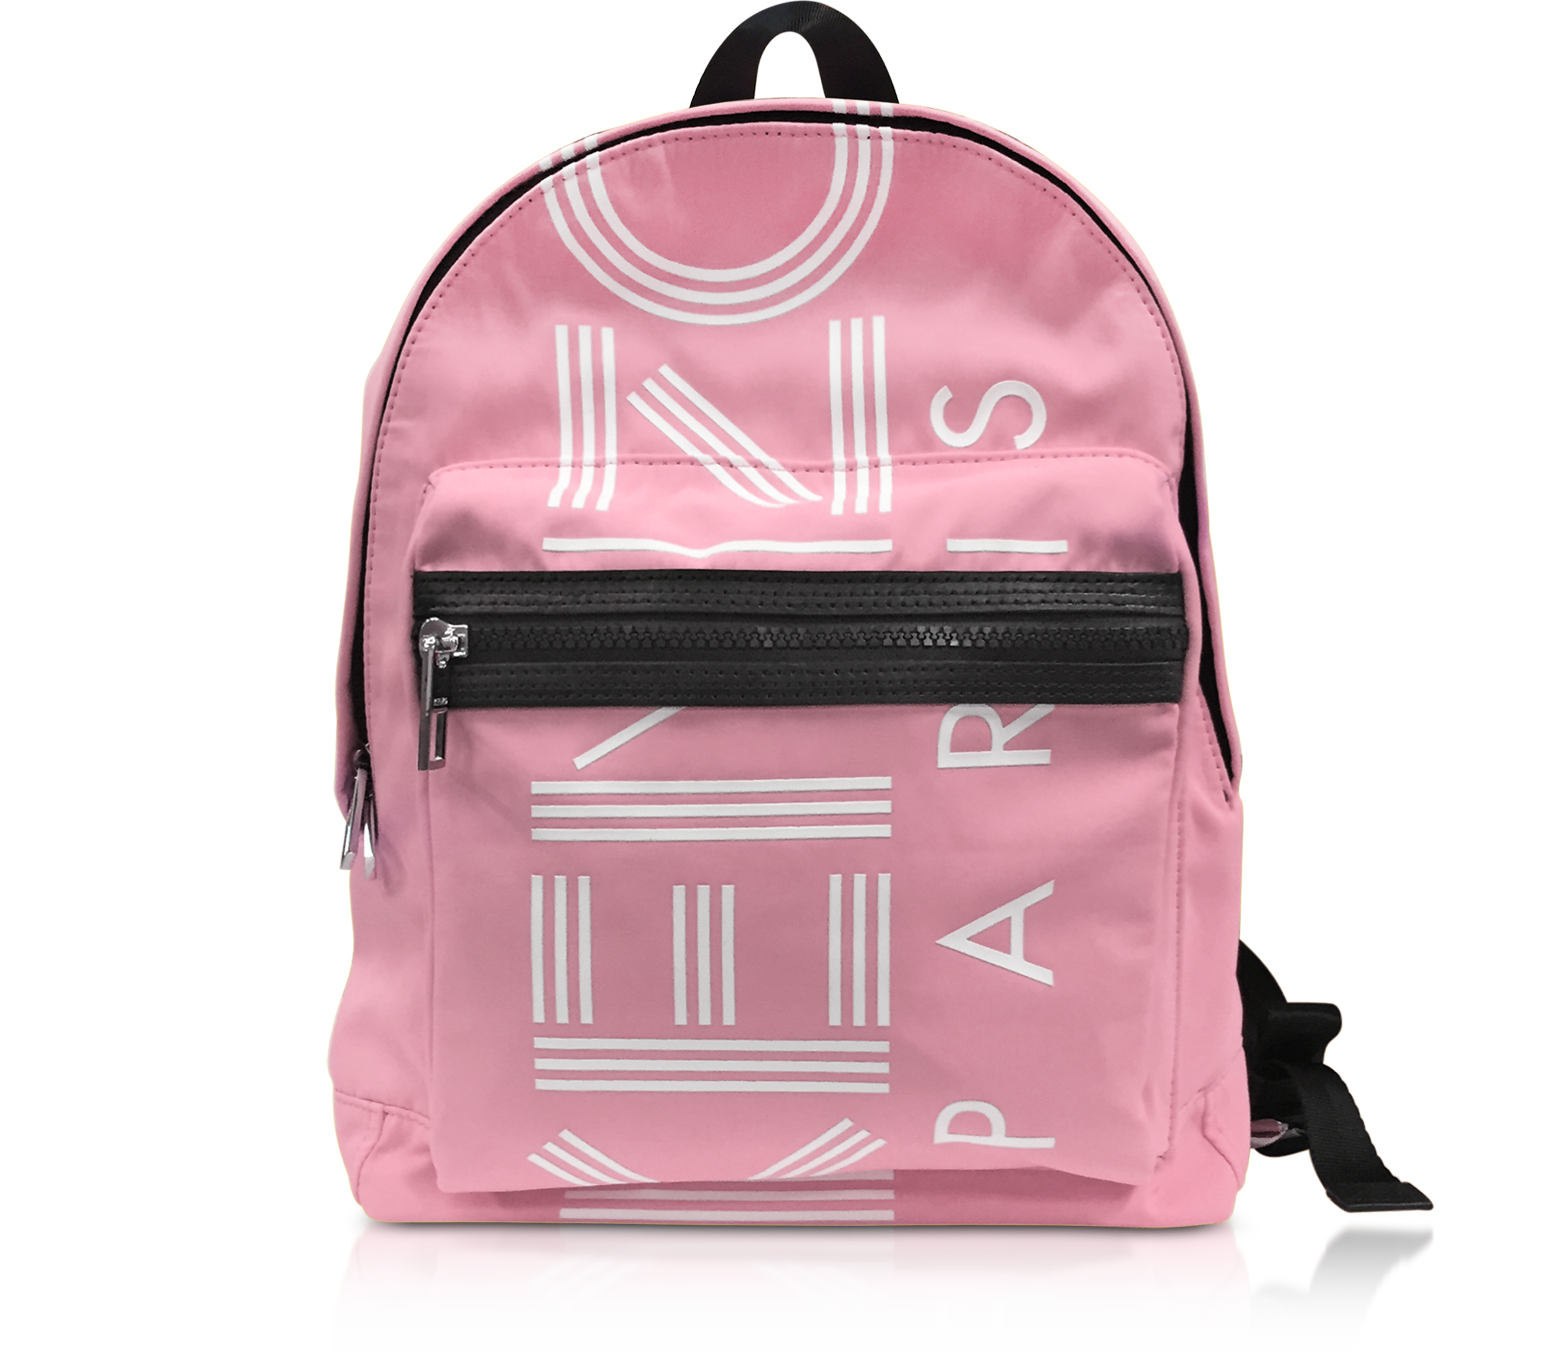 pink kenzo backpack